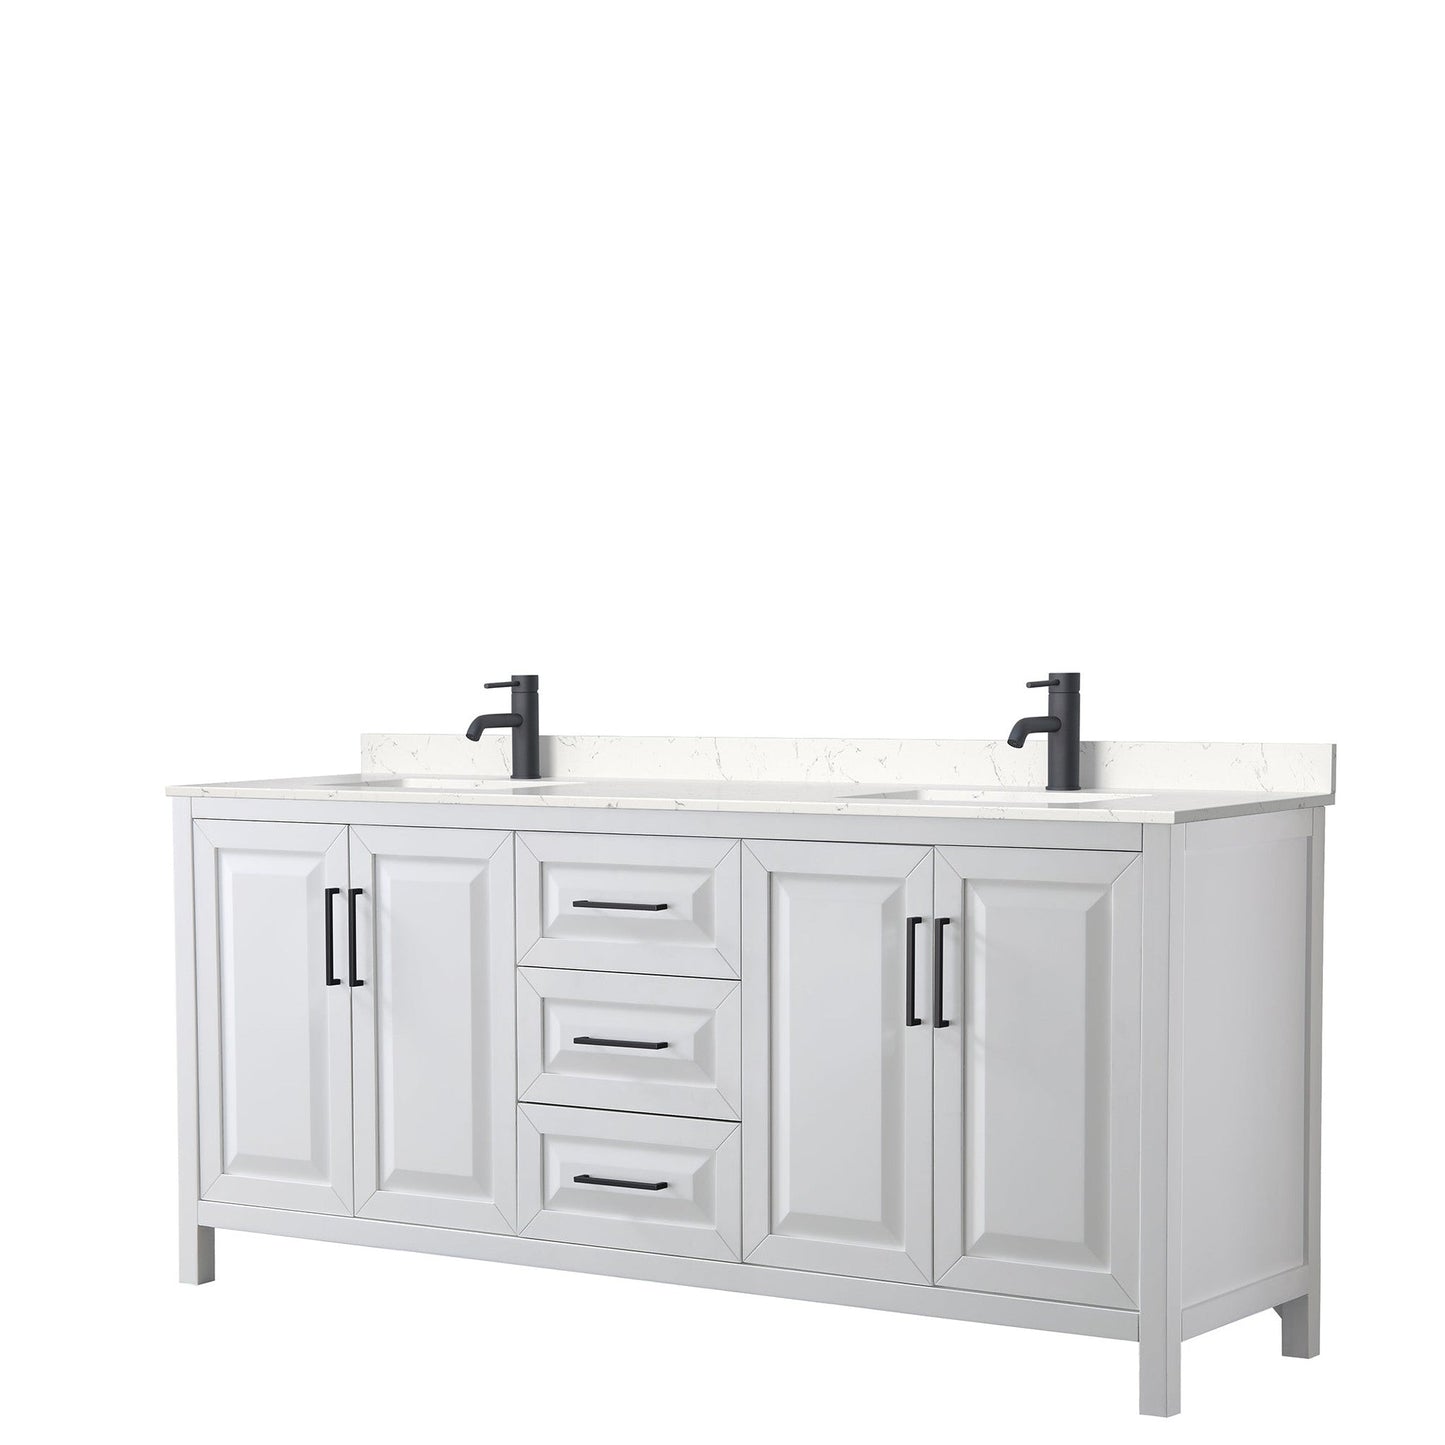 Daria 80" Double Bathroom Vanity in White, Carrara Cultured Marble Countertop, Undermount Square Sinks, Matte Black Trim